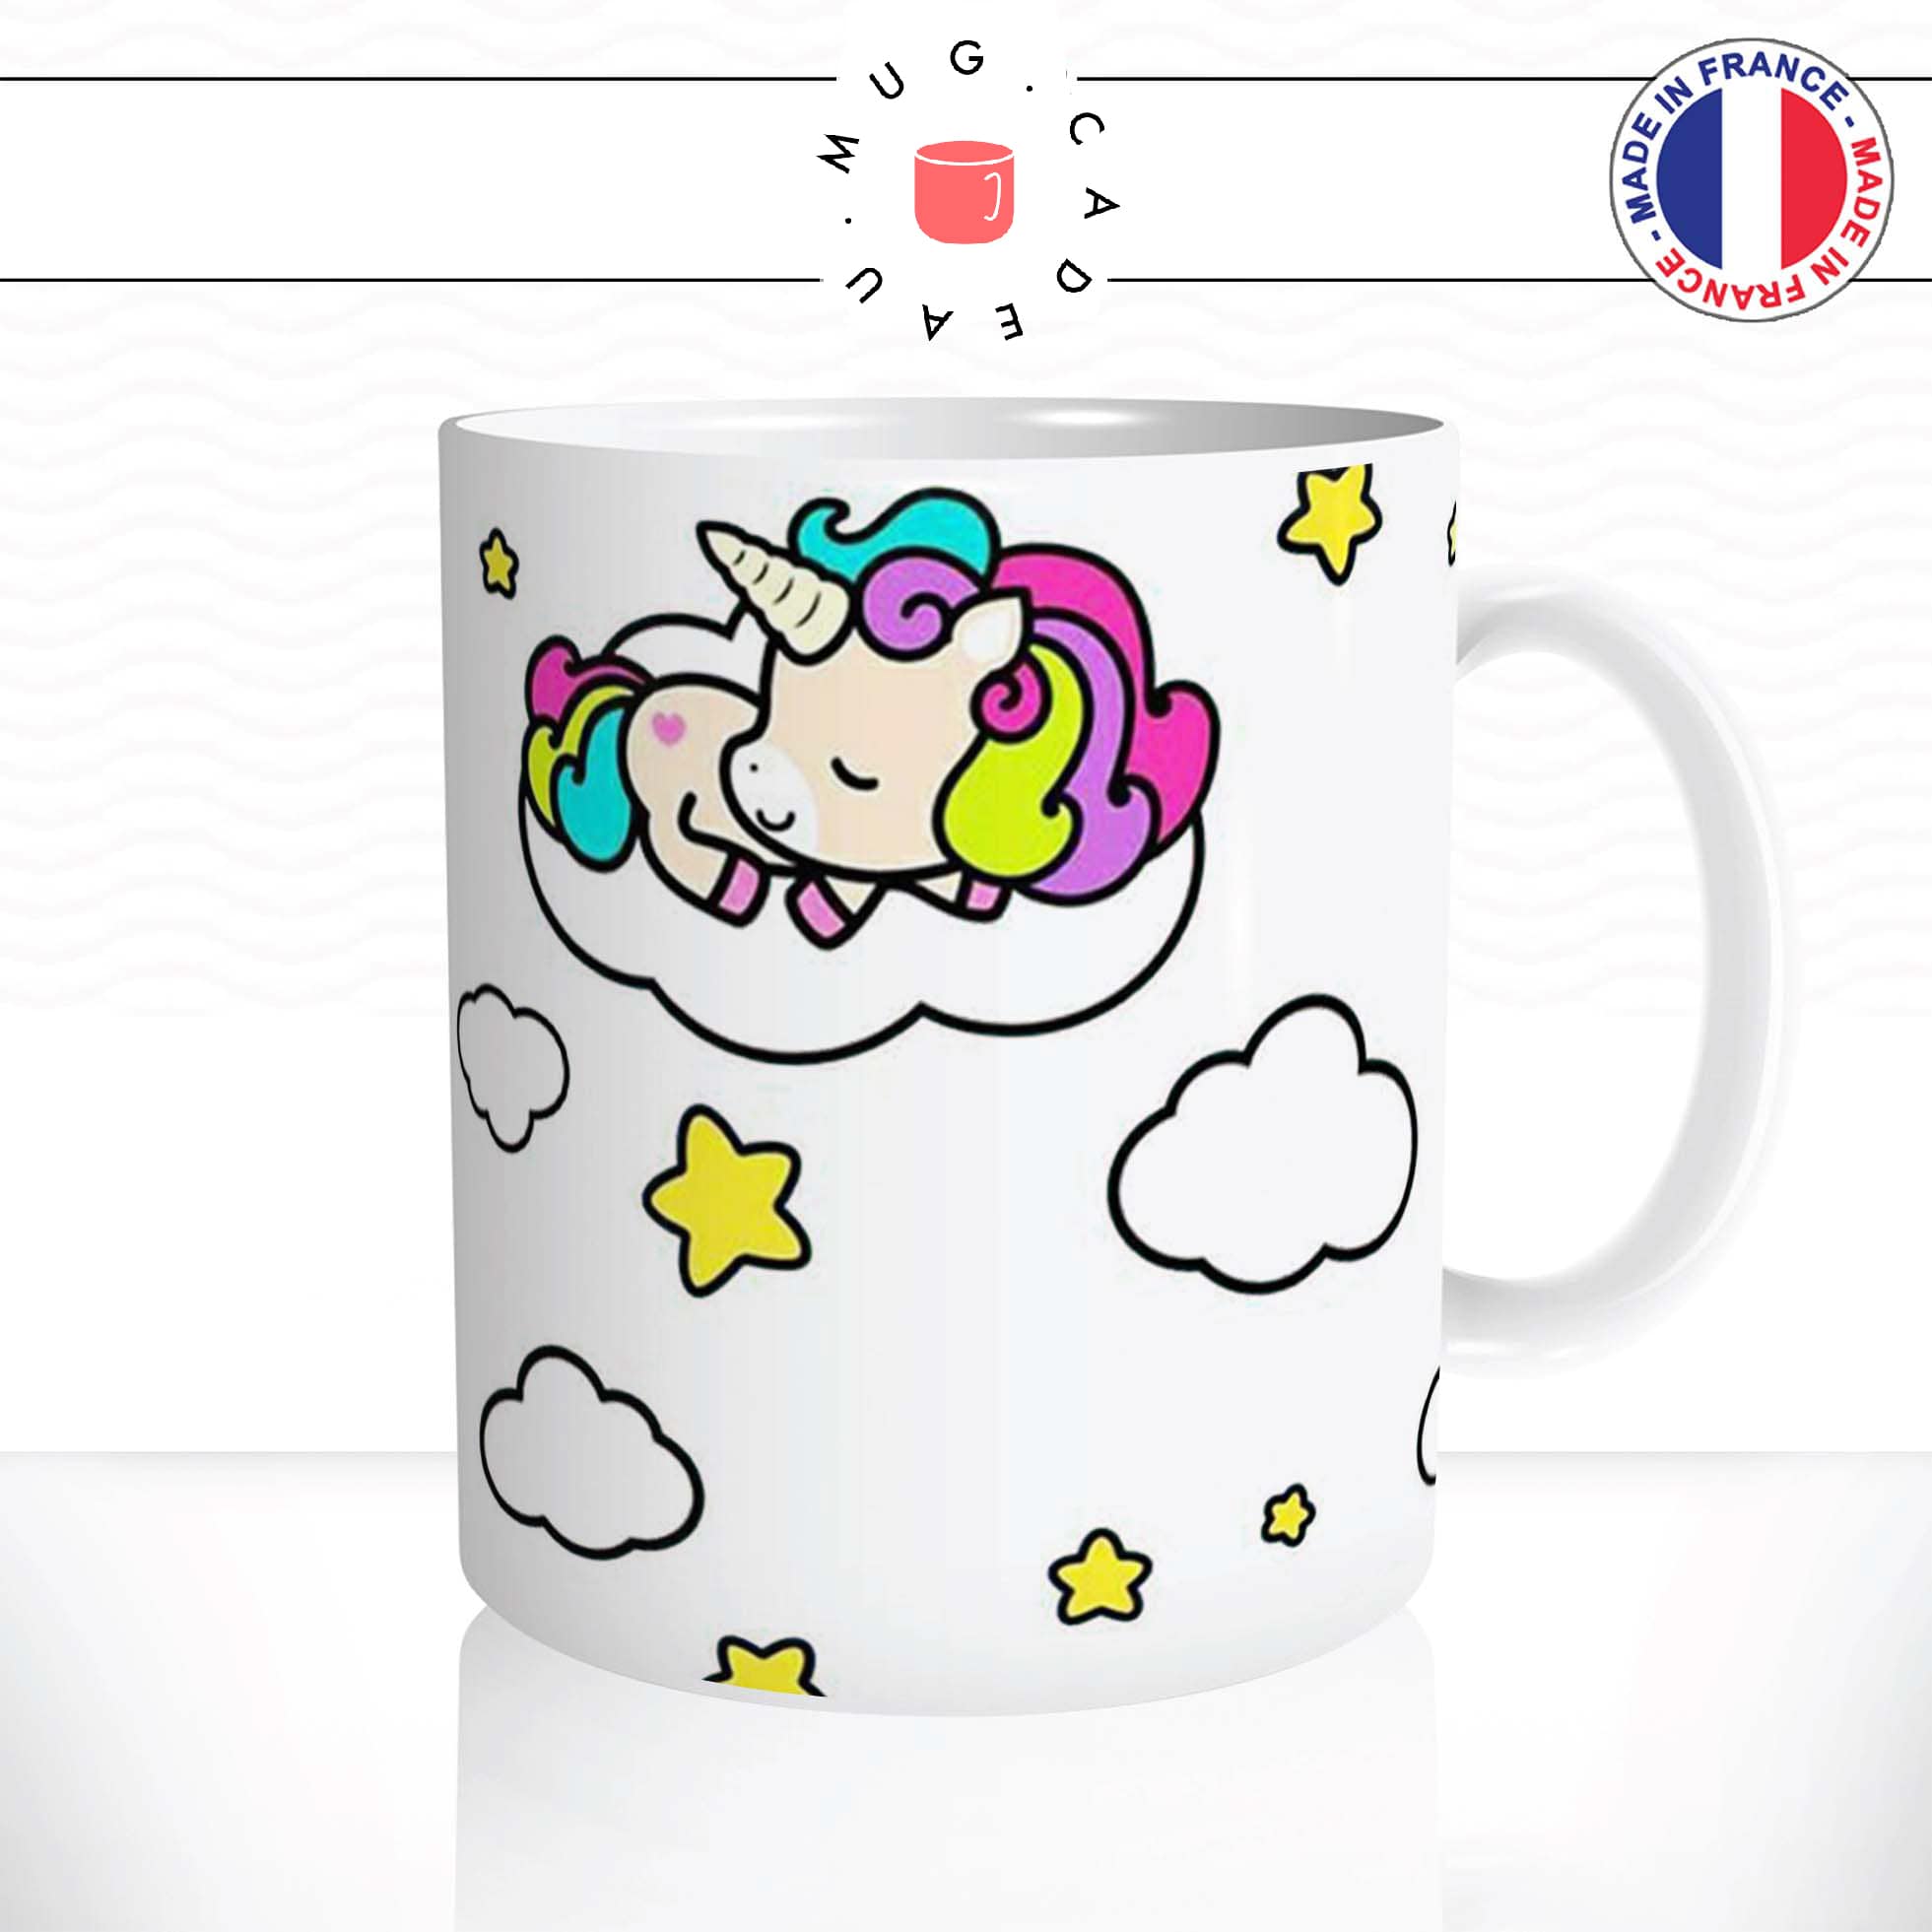 mug-tasse-ref2-licorne-dors-nuage-etoile-enfant-cafe-the-mugs-tasses-personnalise-anse-droite-min